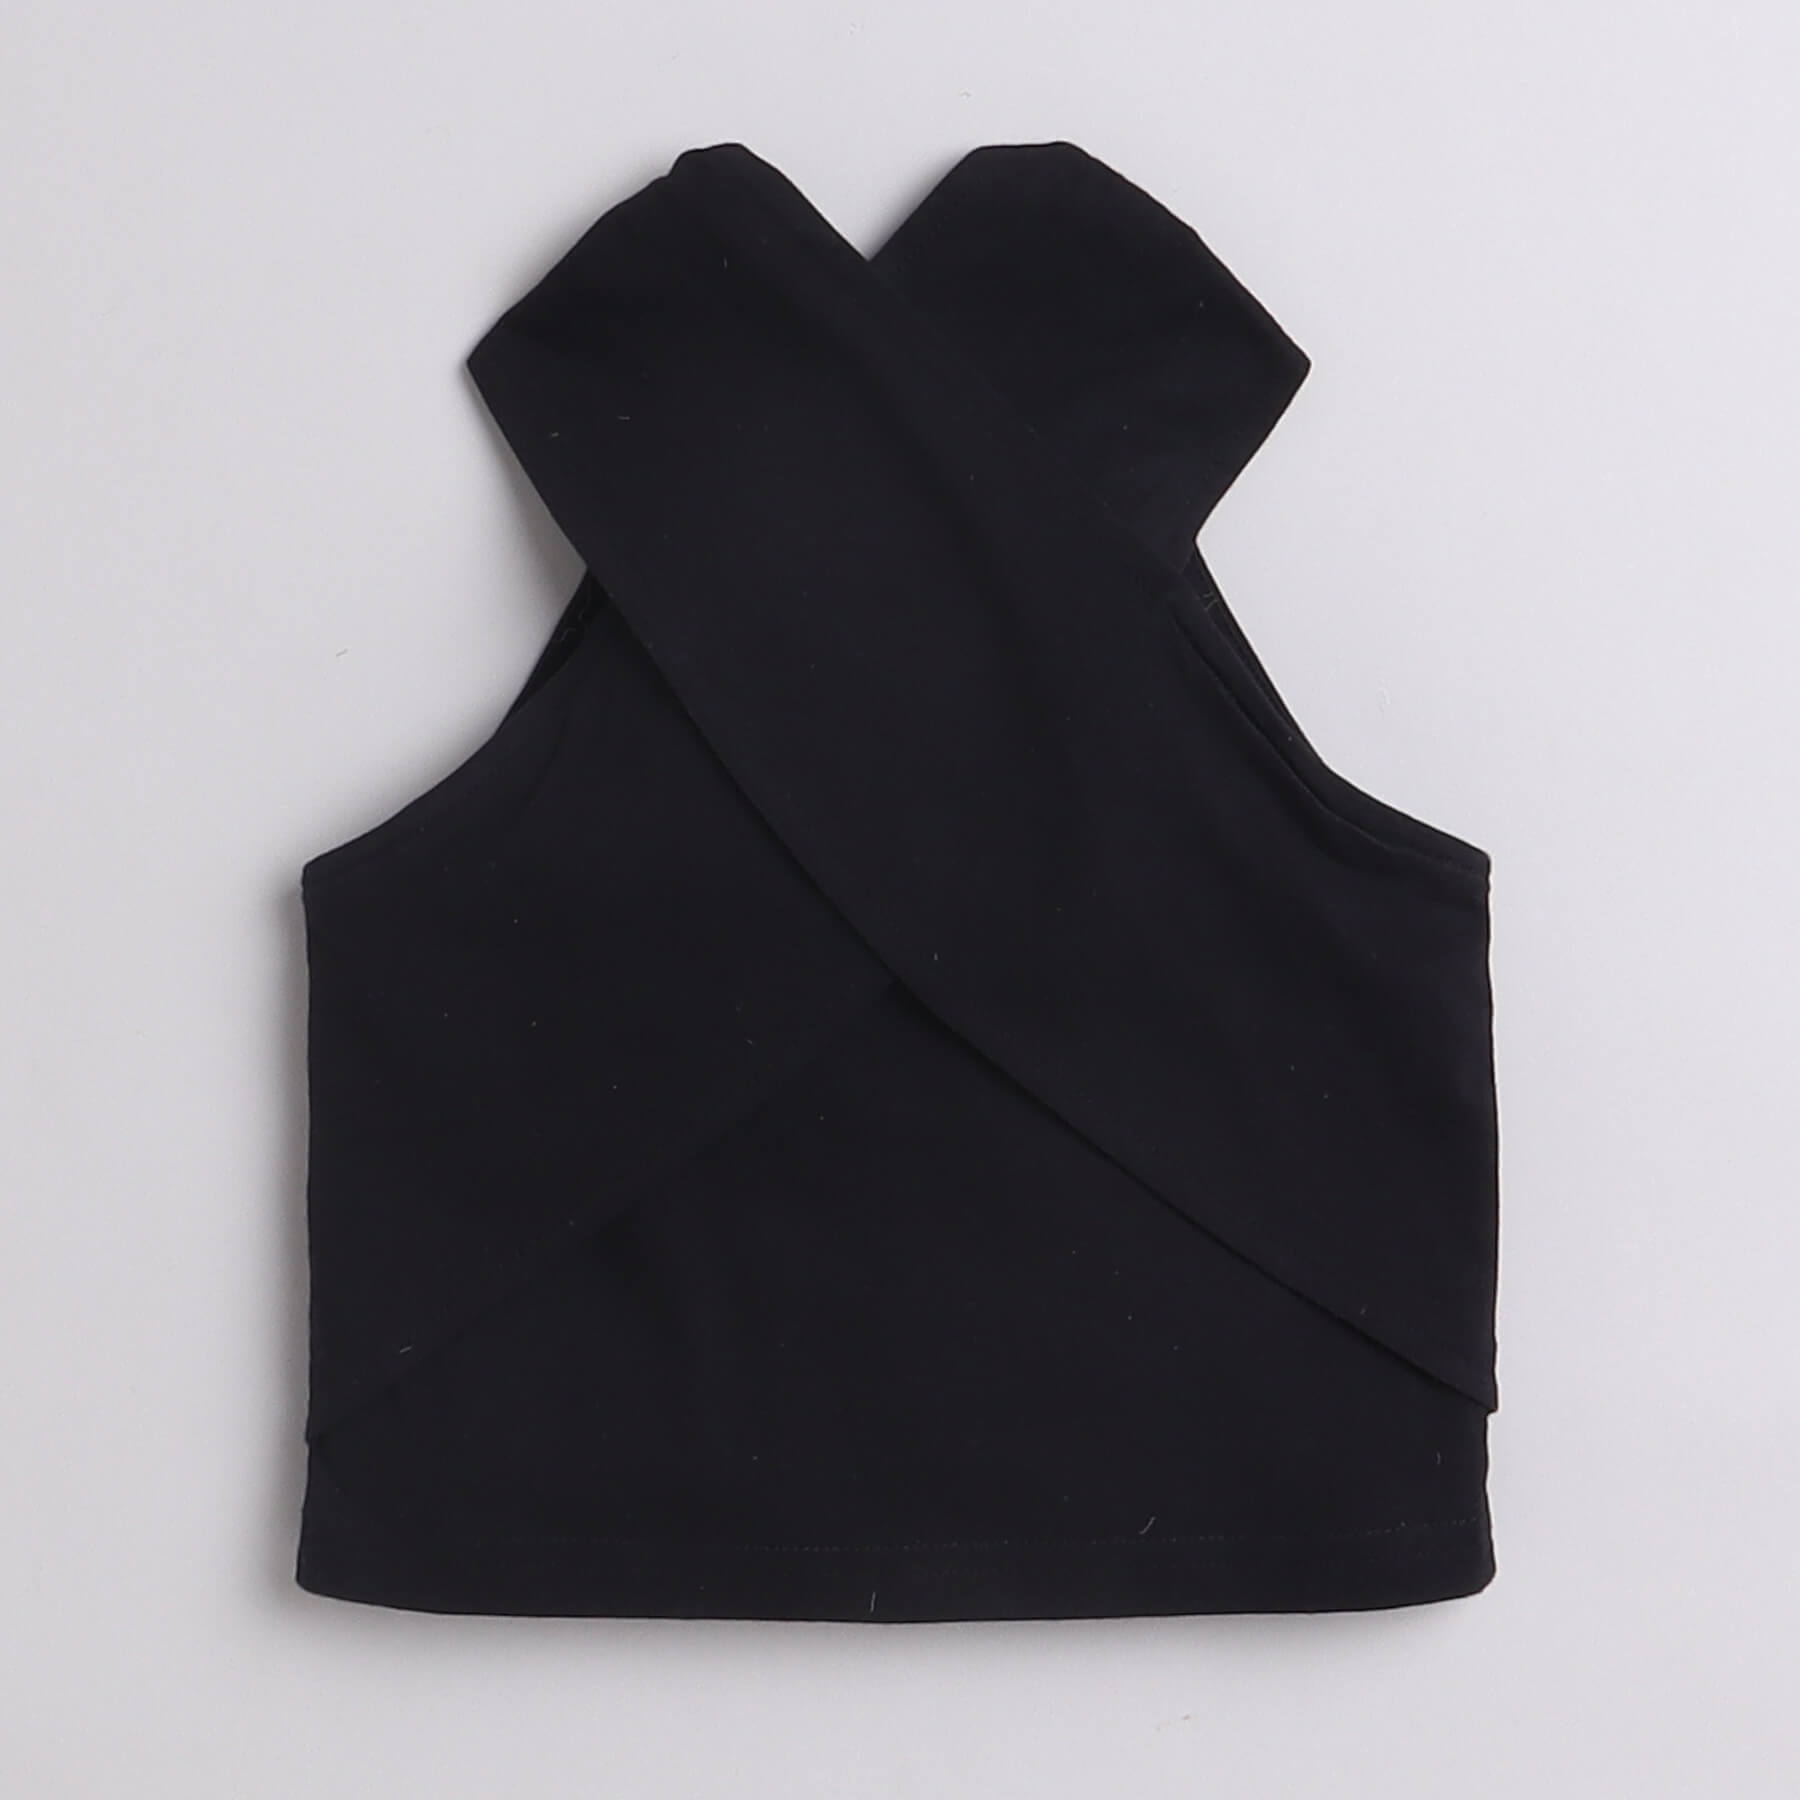 Shop Cross Neck Halter Crop Top And Animal Print Bellbottom Pant Set- Black/Brown Online